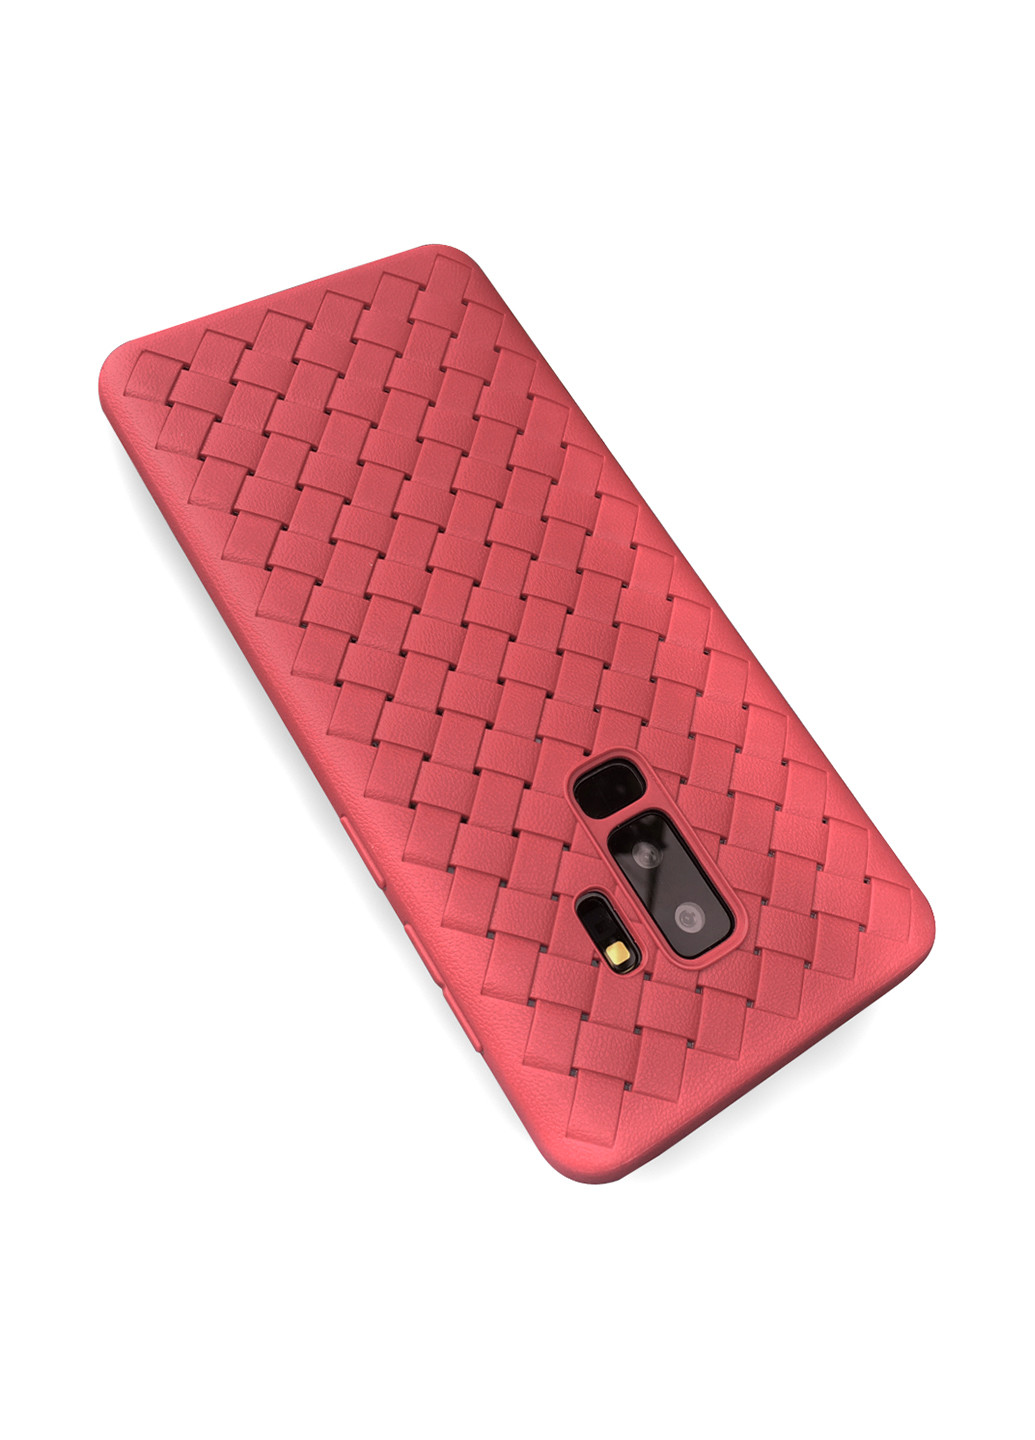 Накладка TPU Leather Case для Samsung Galaxy S9+ SM-G965 red (702311) BeCover tpu leather case для samsung galaxy s9+ sm-g965 red (702311) (145630658)